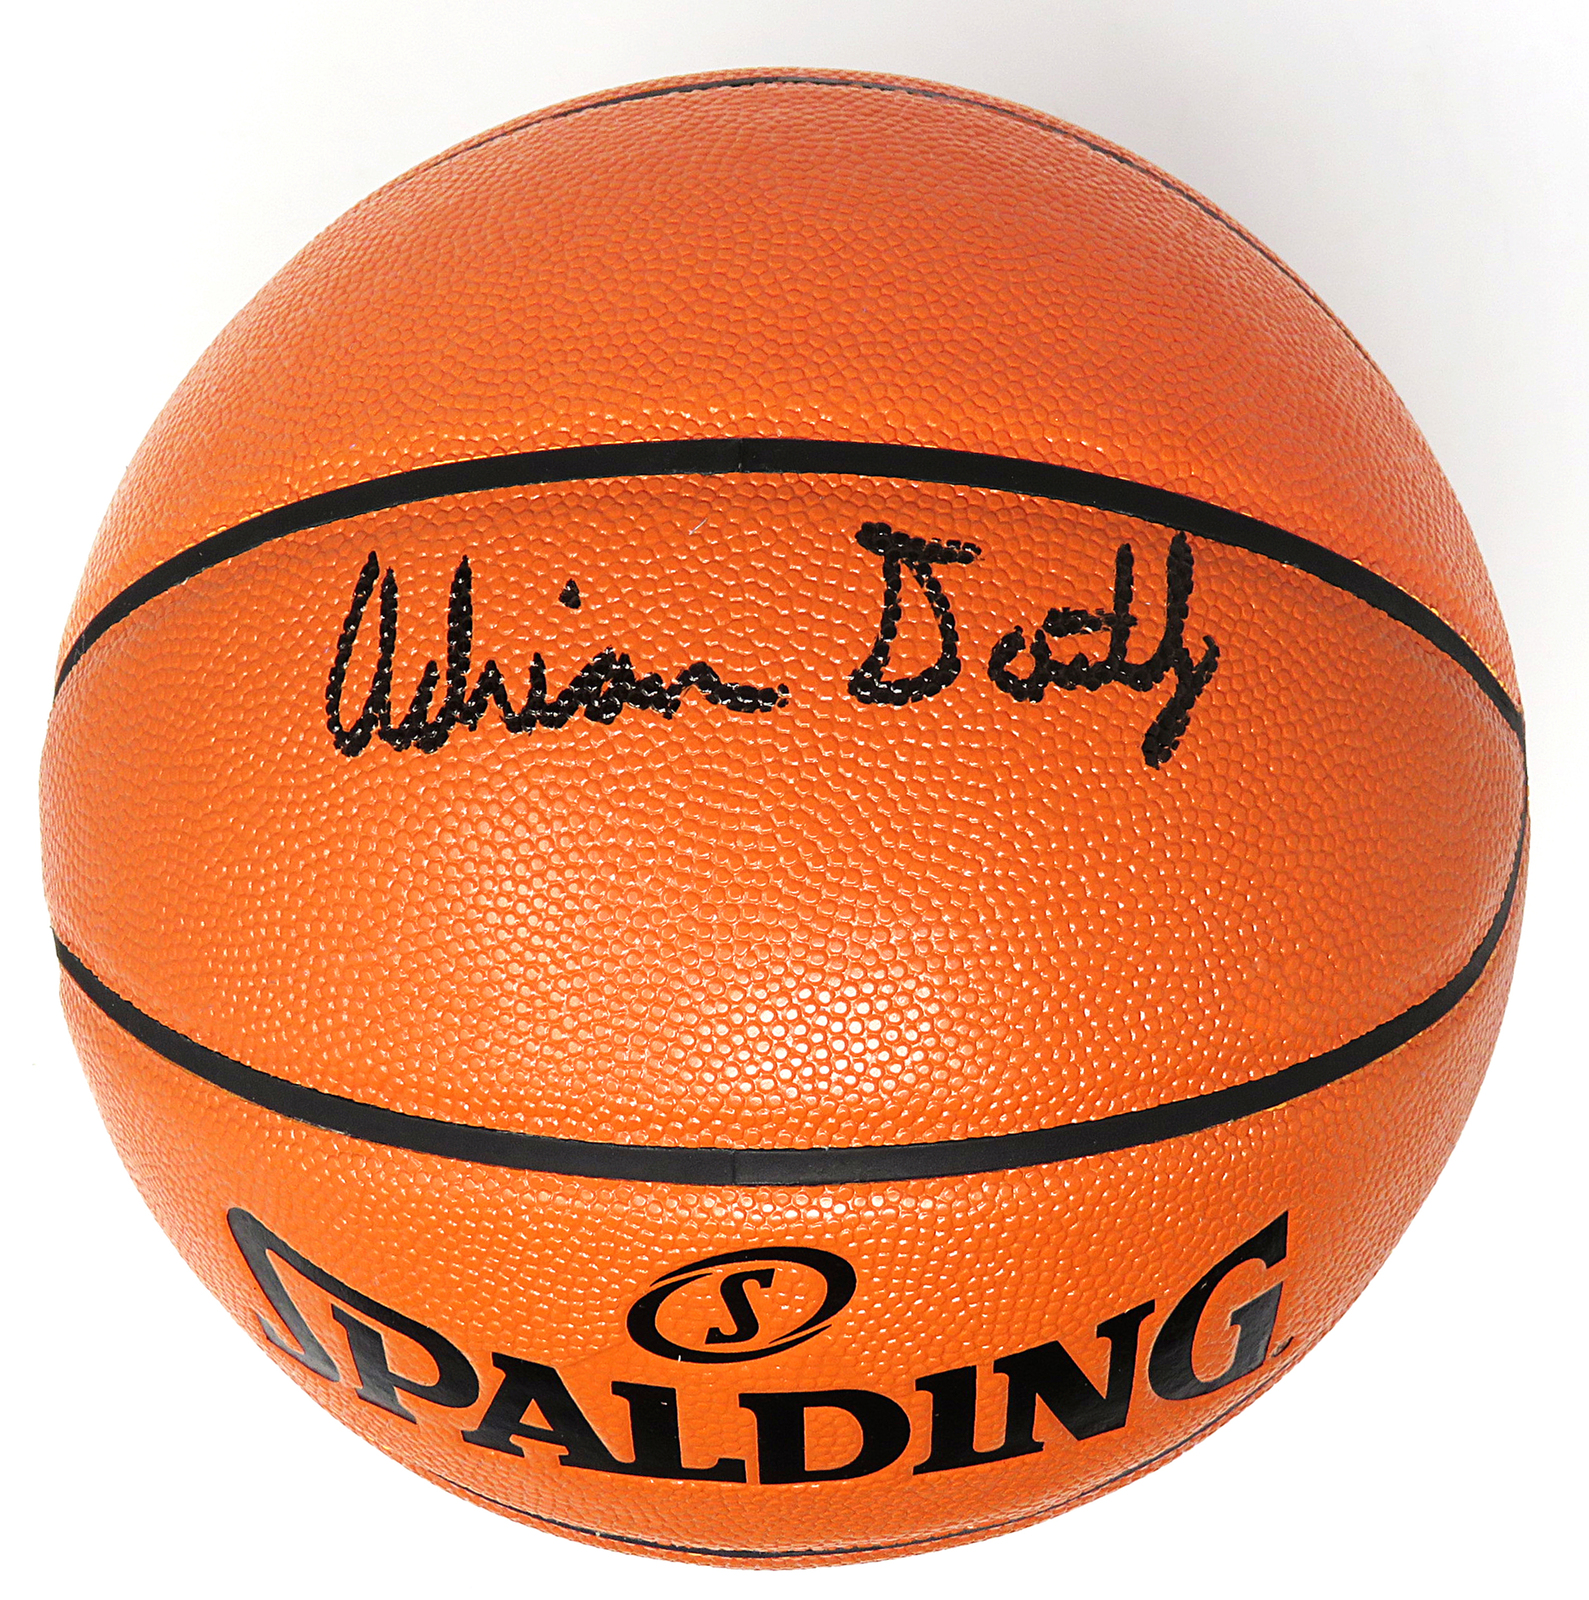 Adrian Dantley Signed Spalding Game Series Replica NBA Basketball - $105.00